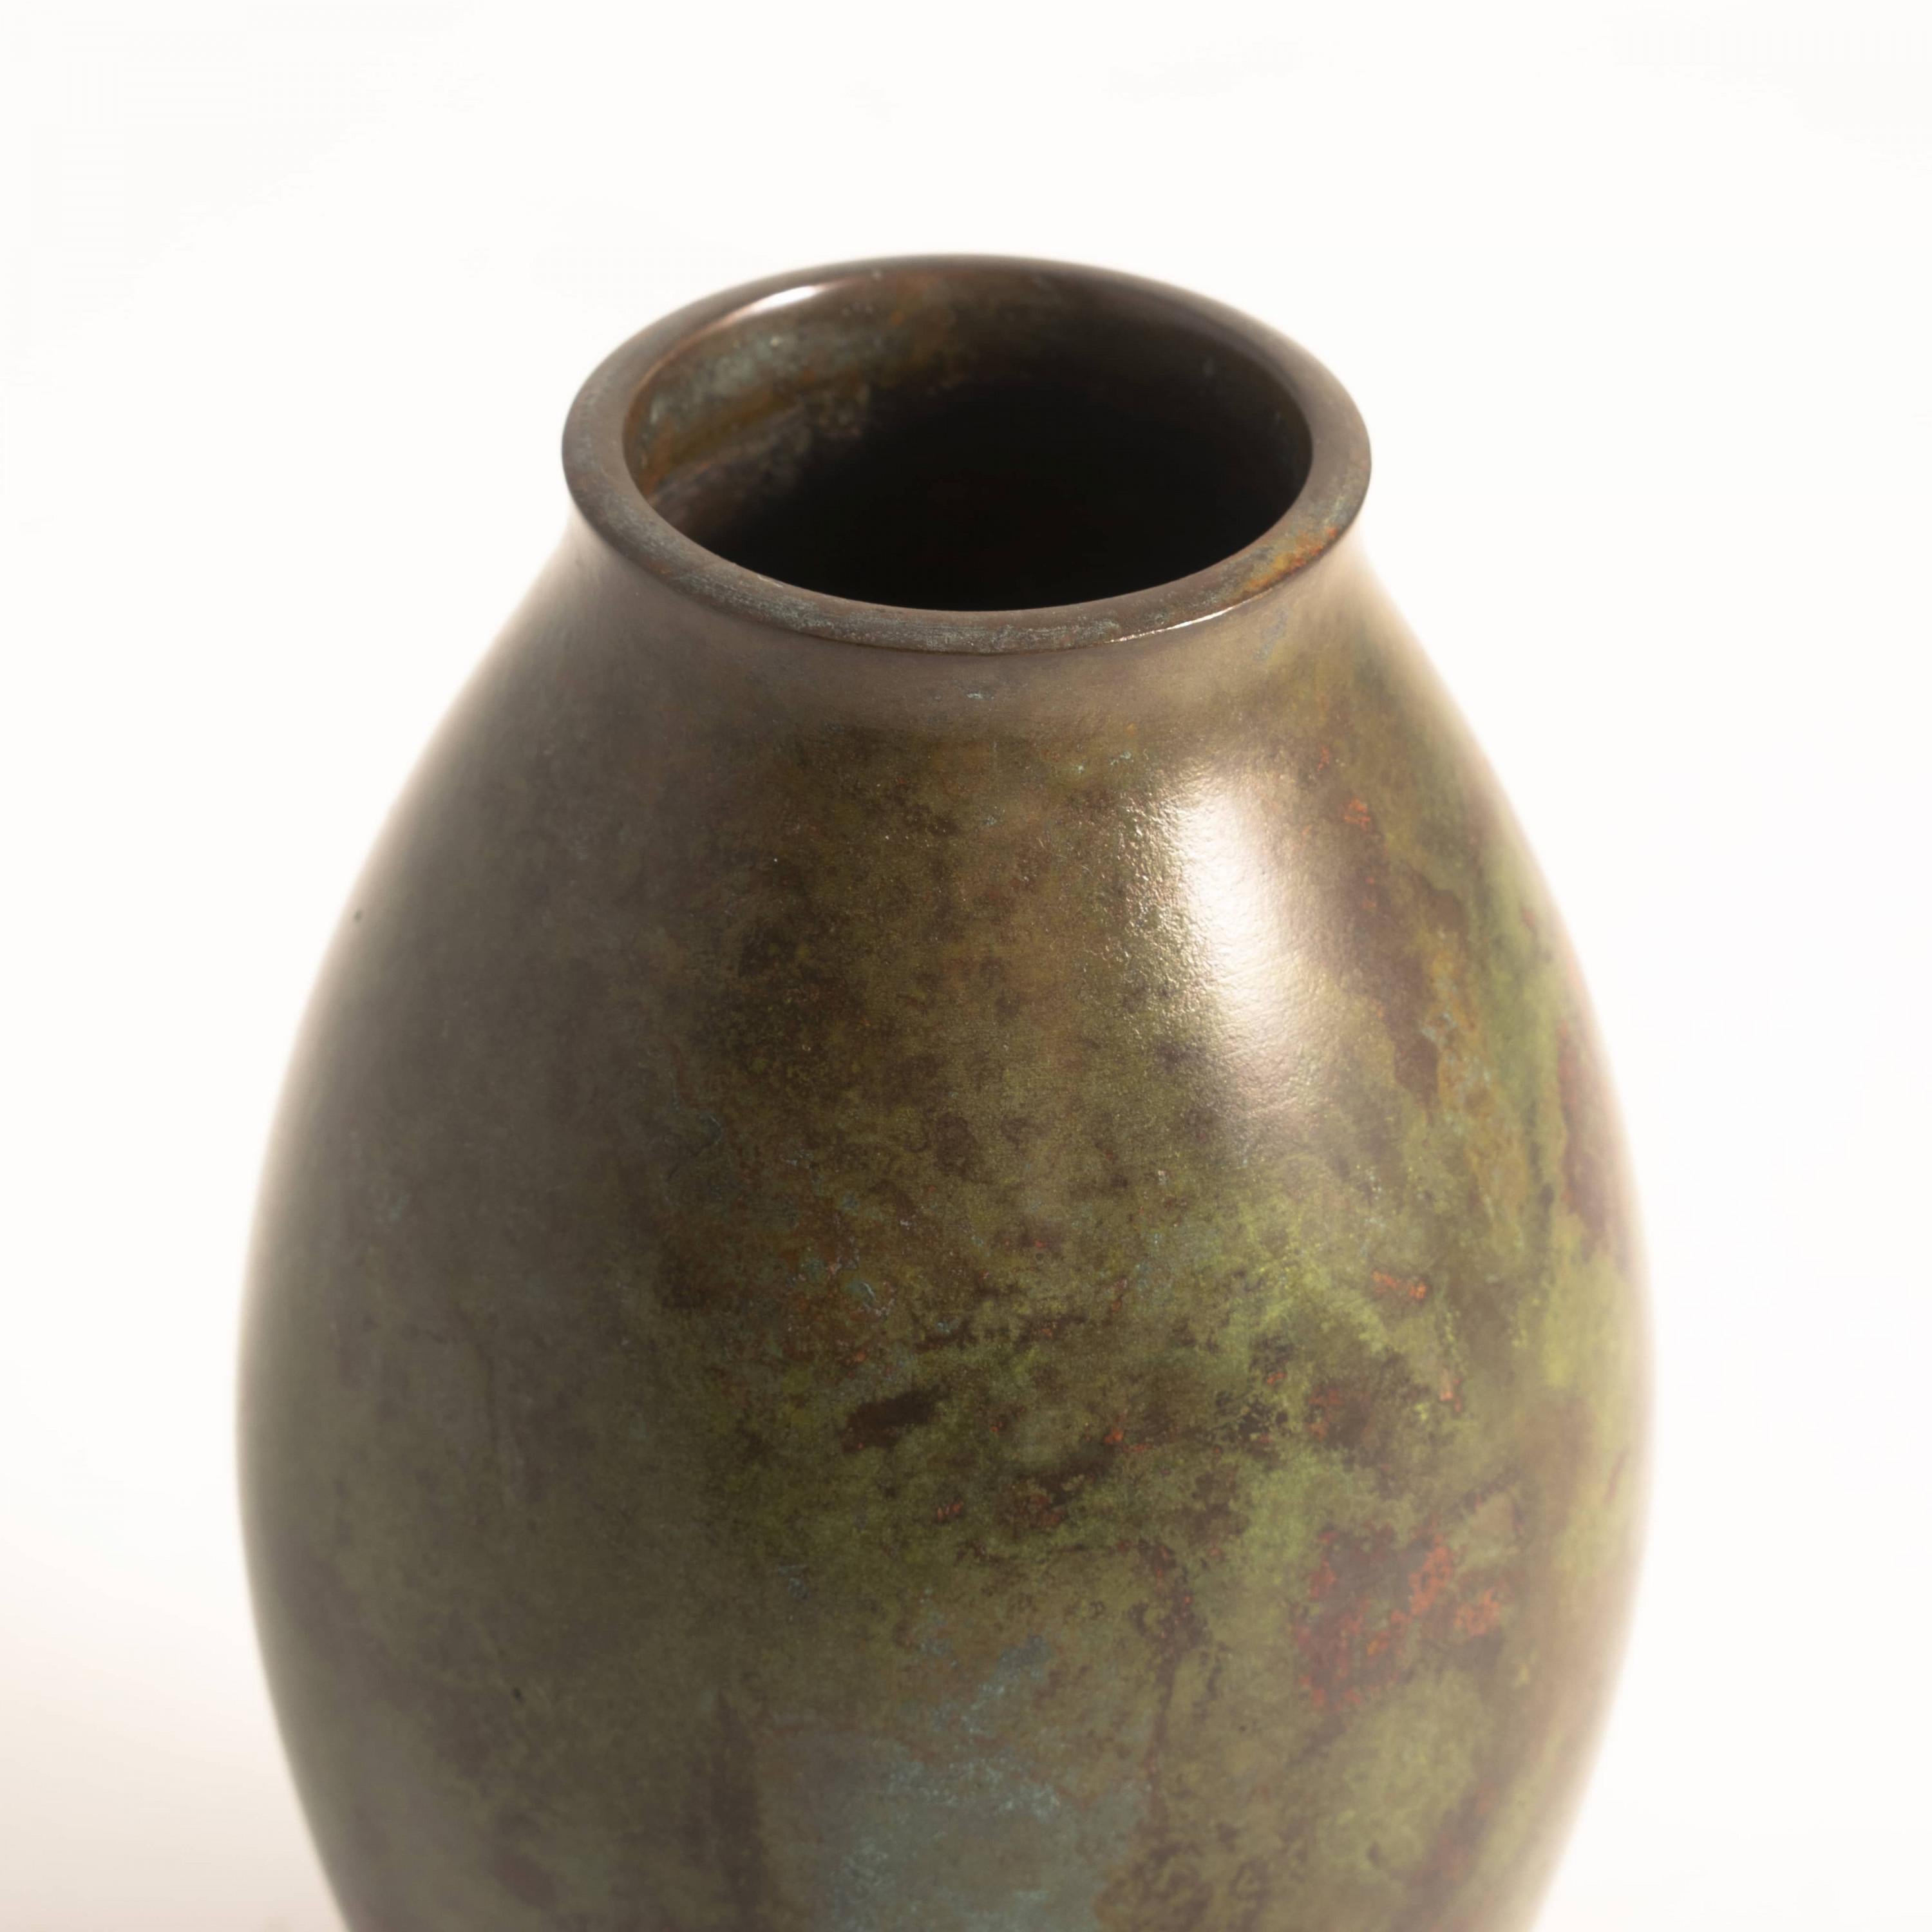 Hasegawa Gasen 1928 - 2002.
Japanese bronze vase.
Beautifully patinated in green / Brownish shades.
Seal marked.